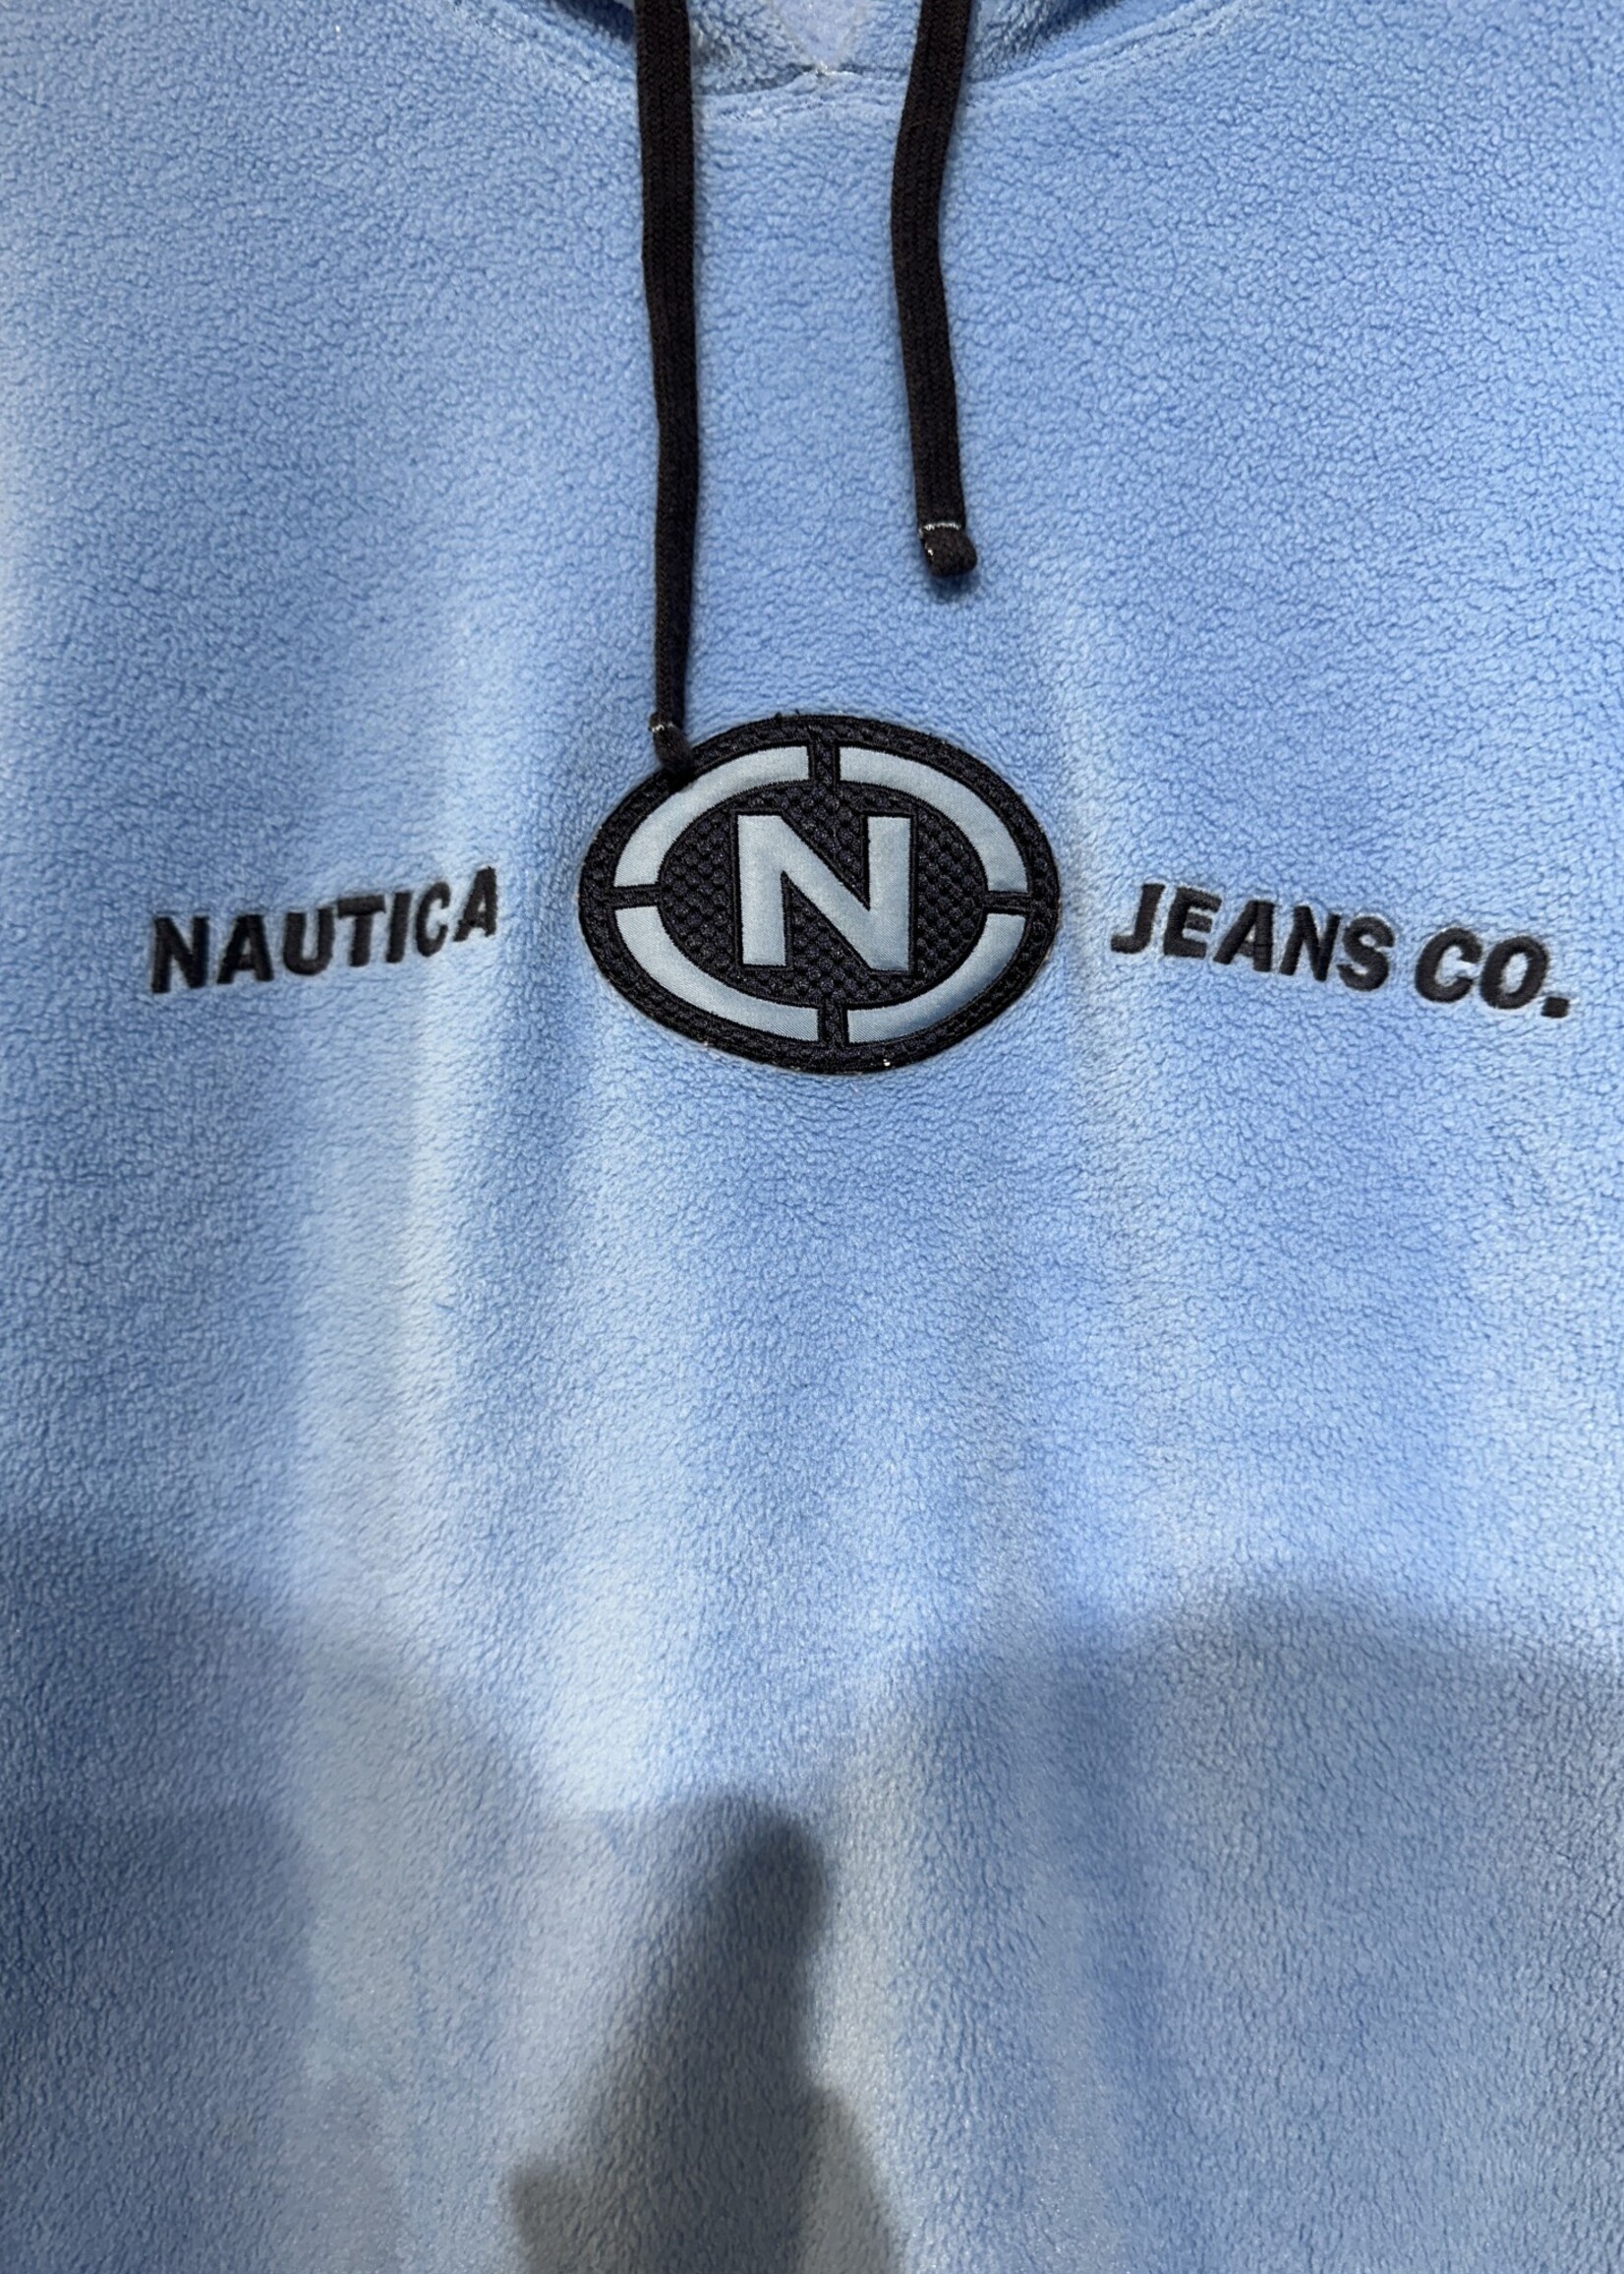 Nautica Jeans Vintage Oversized Blue Fleece Hoodie S